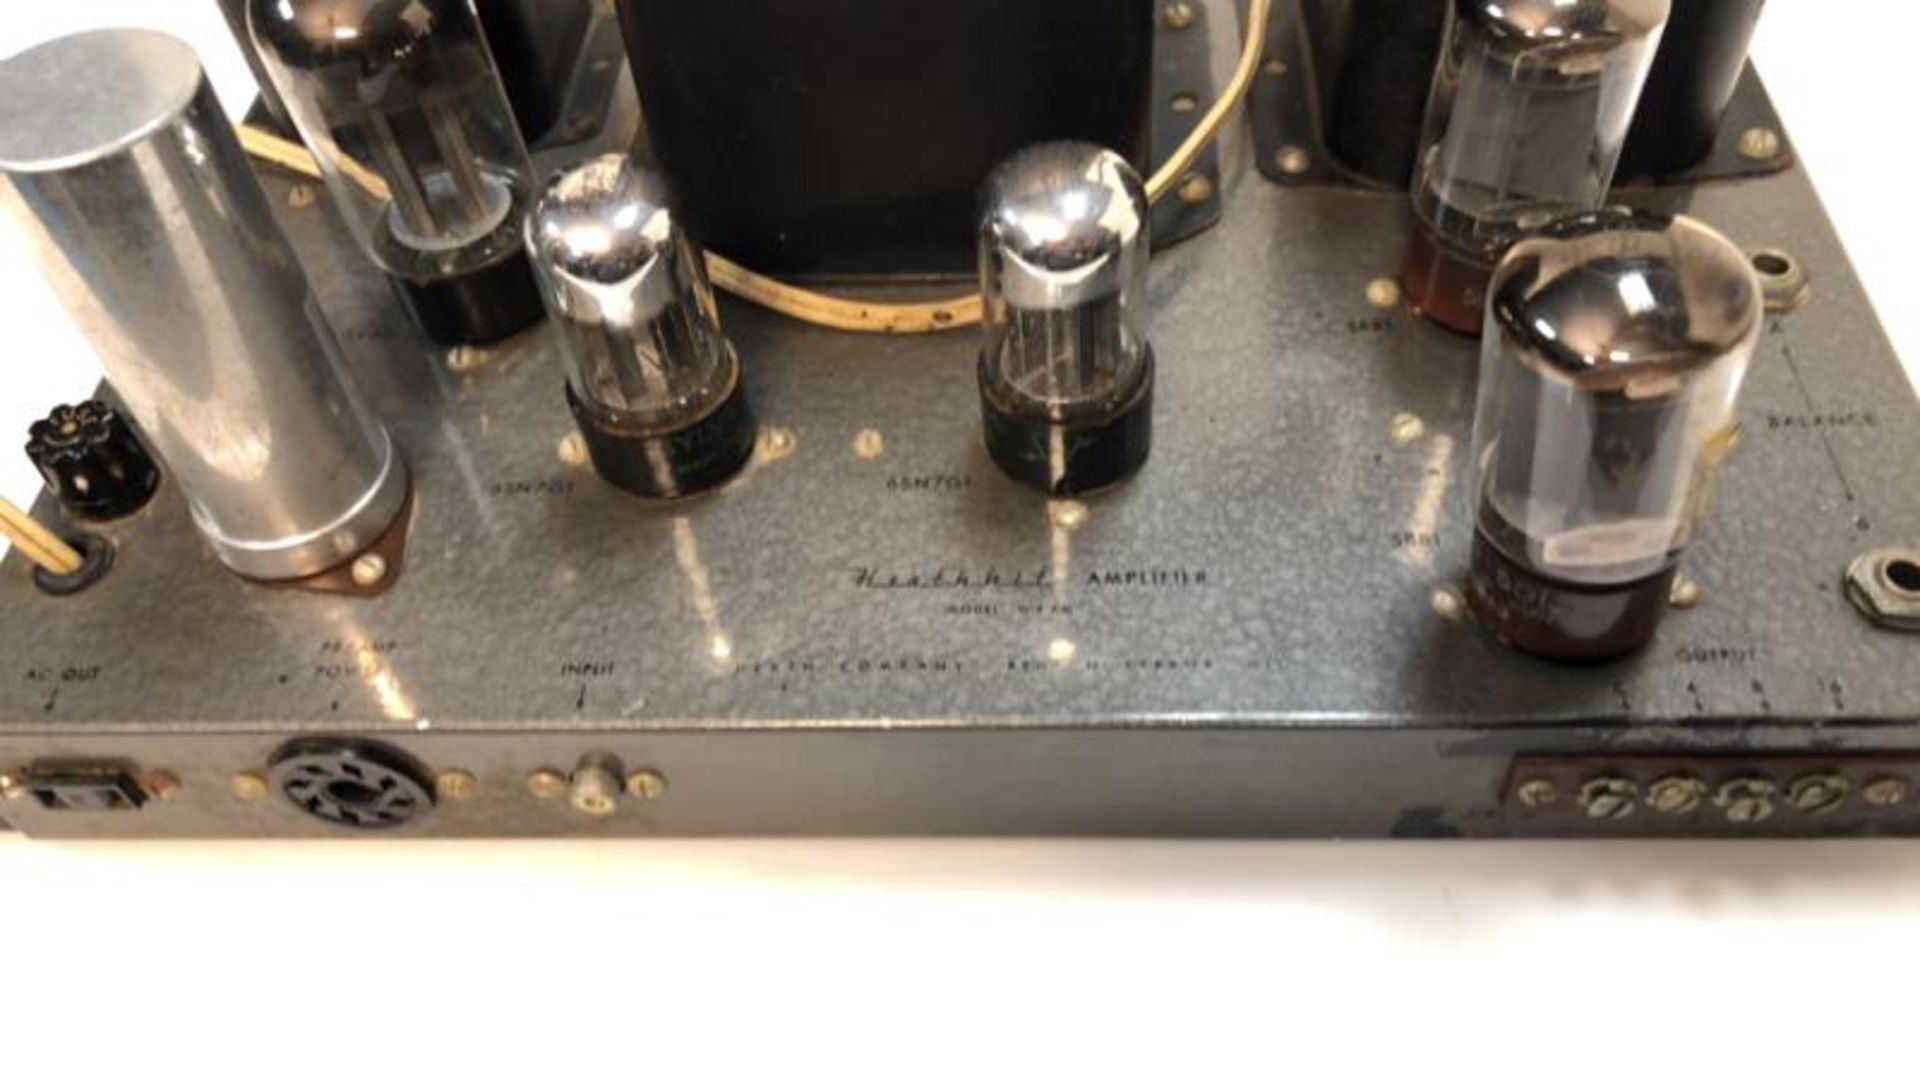 Heathkit amp, model W4-AM, Heath Co, w tubes - Image 2 of 7